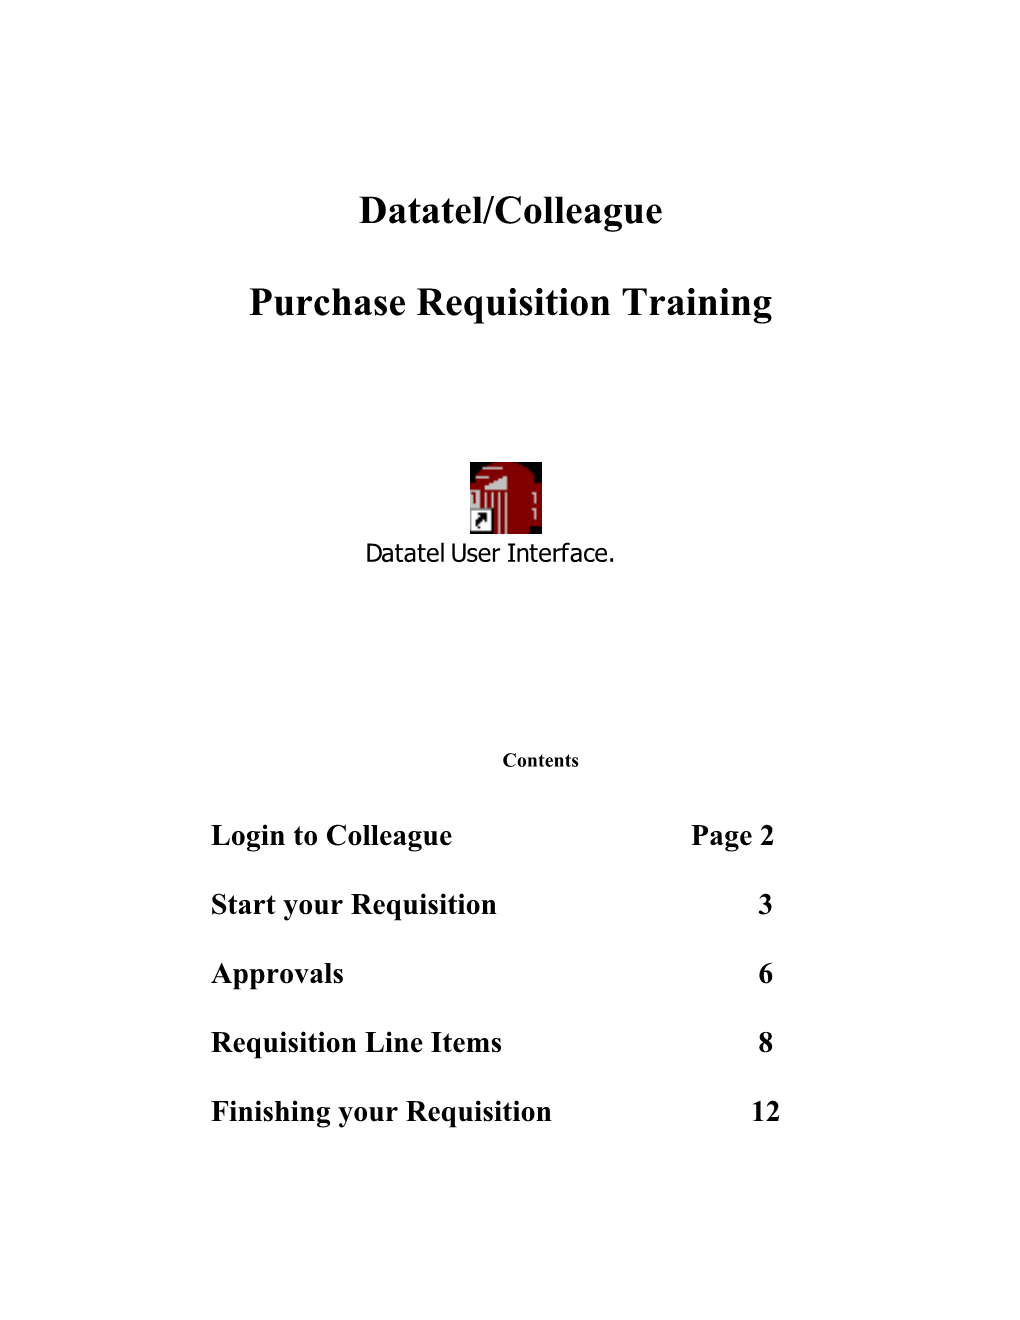 Datatel Purchase Requisition Training